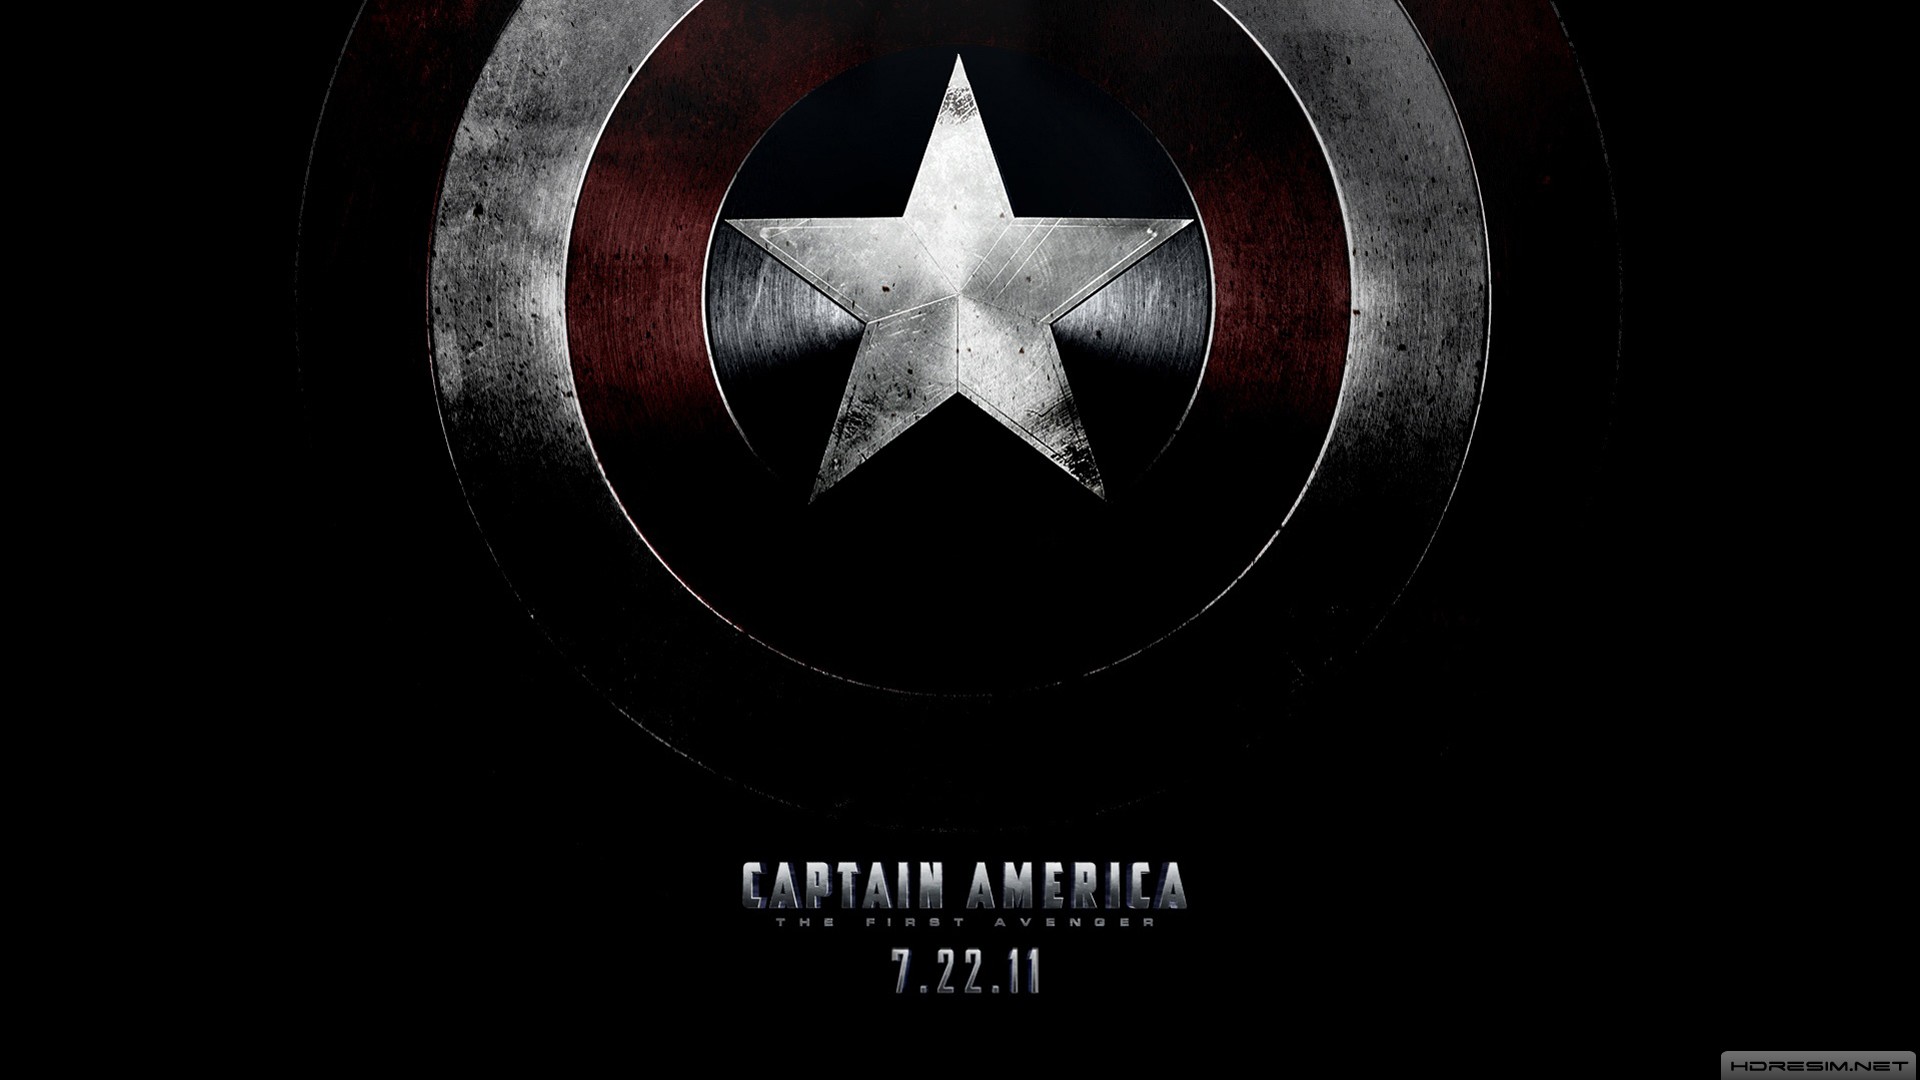 kaptan amerika,film,avengers,ilk yenilmez